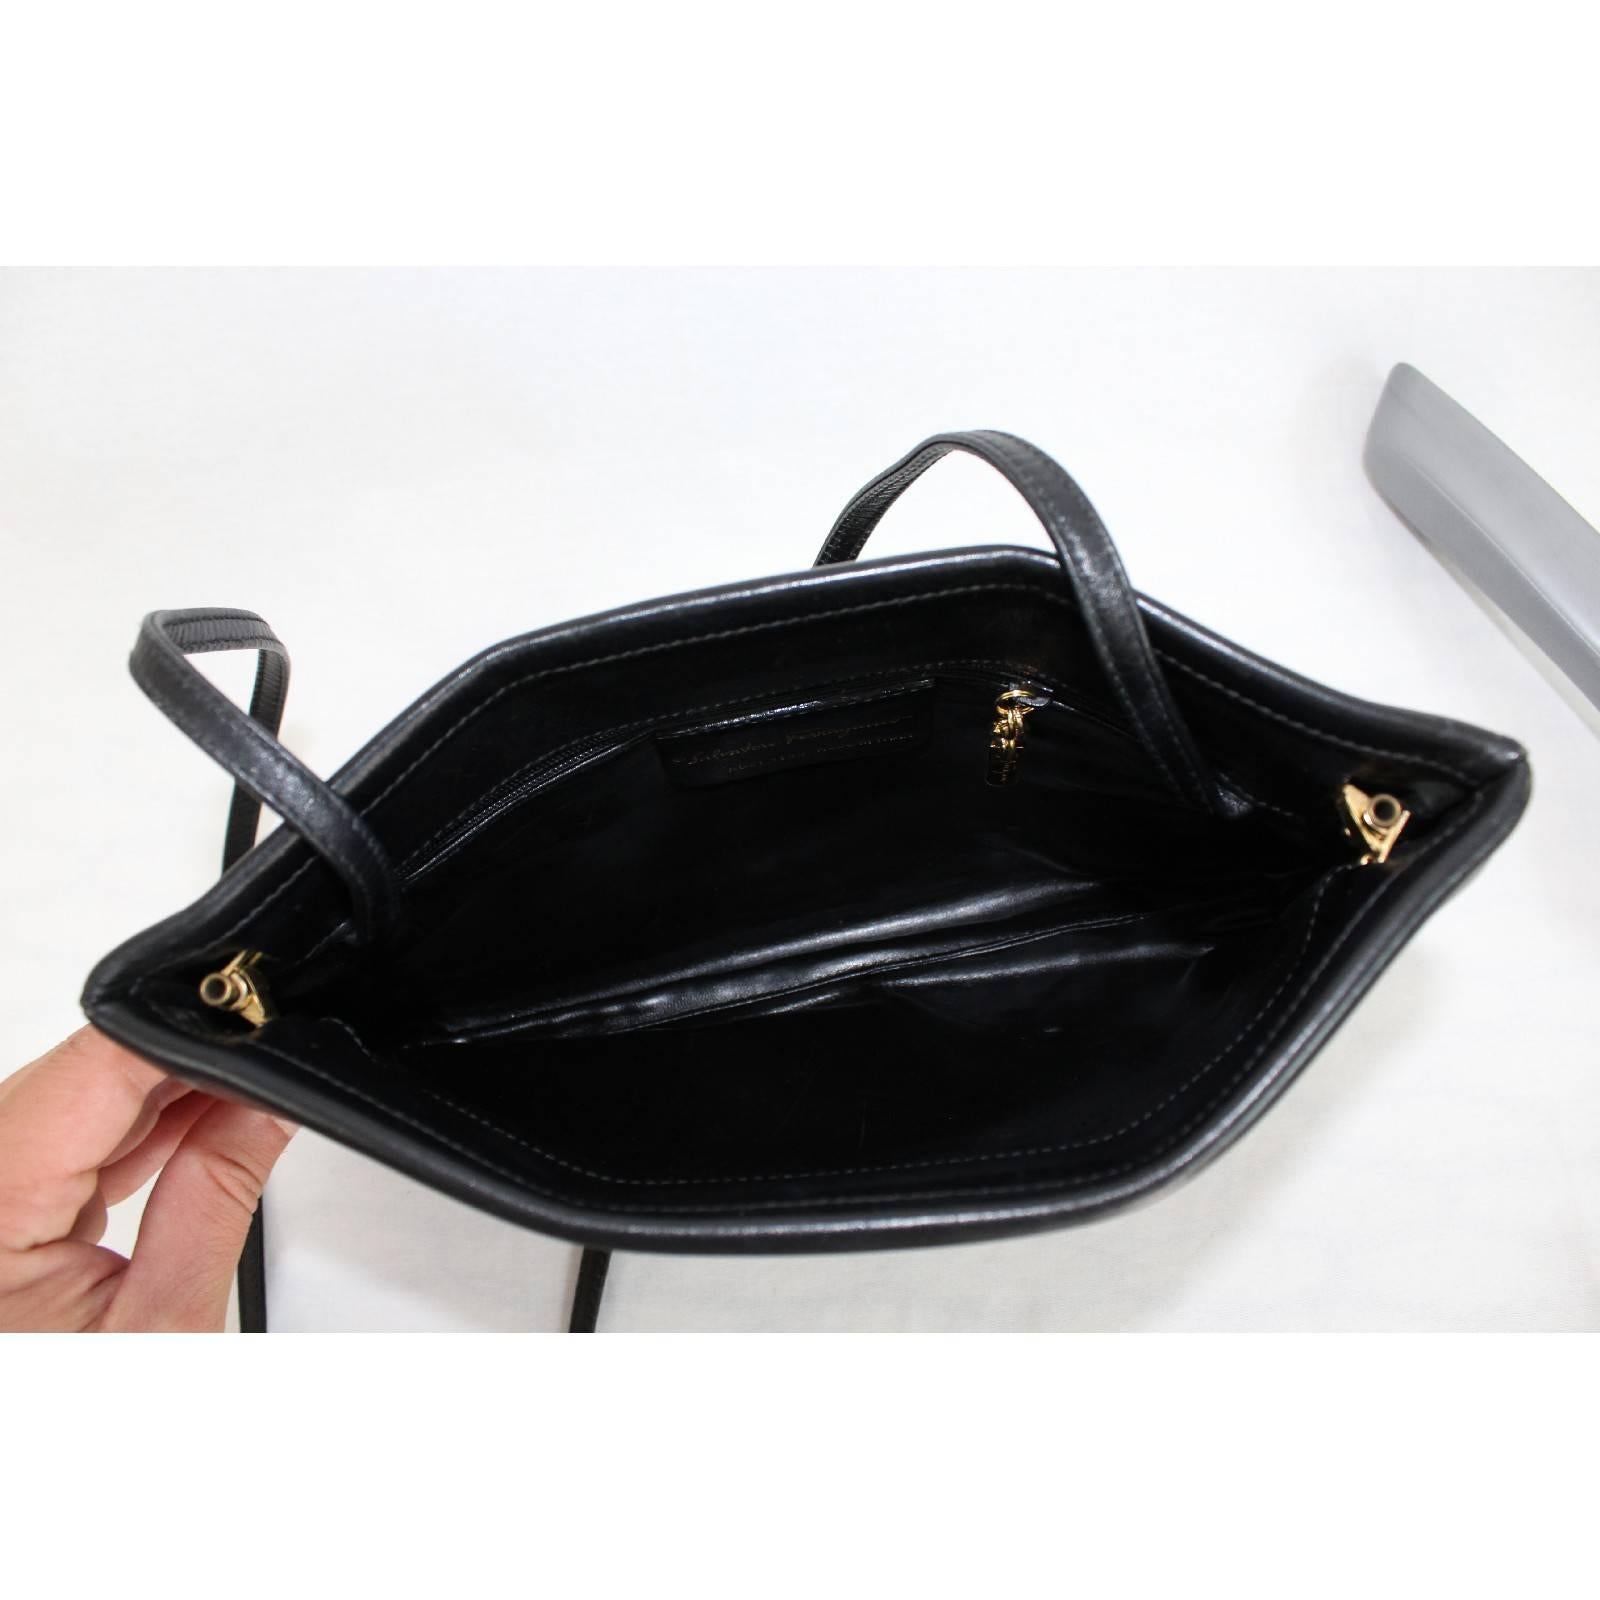 Salvatore Ferragamo black leather clutch bag cod. ad 211183 made italy 1980s 1